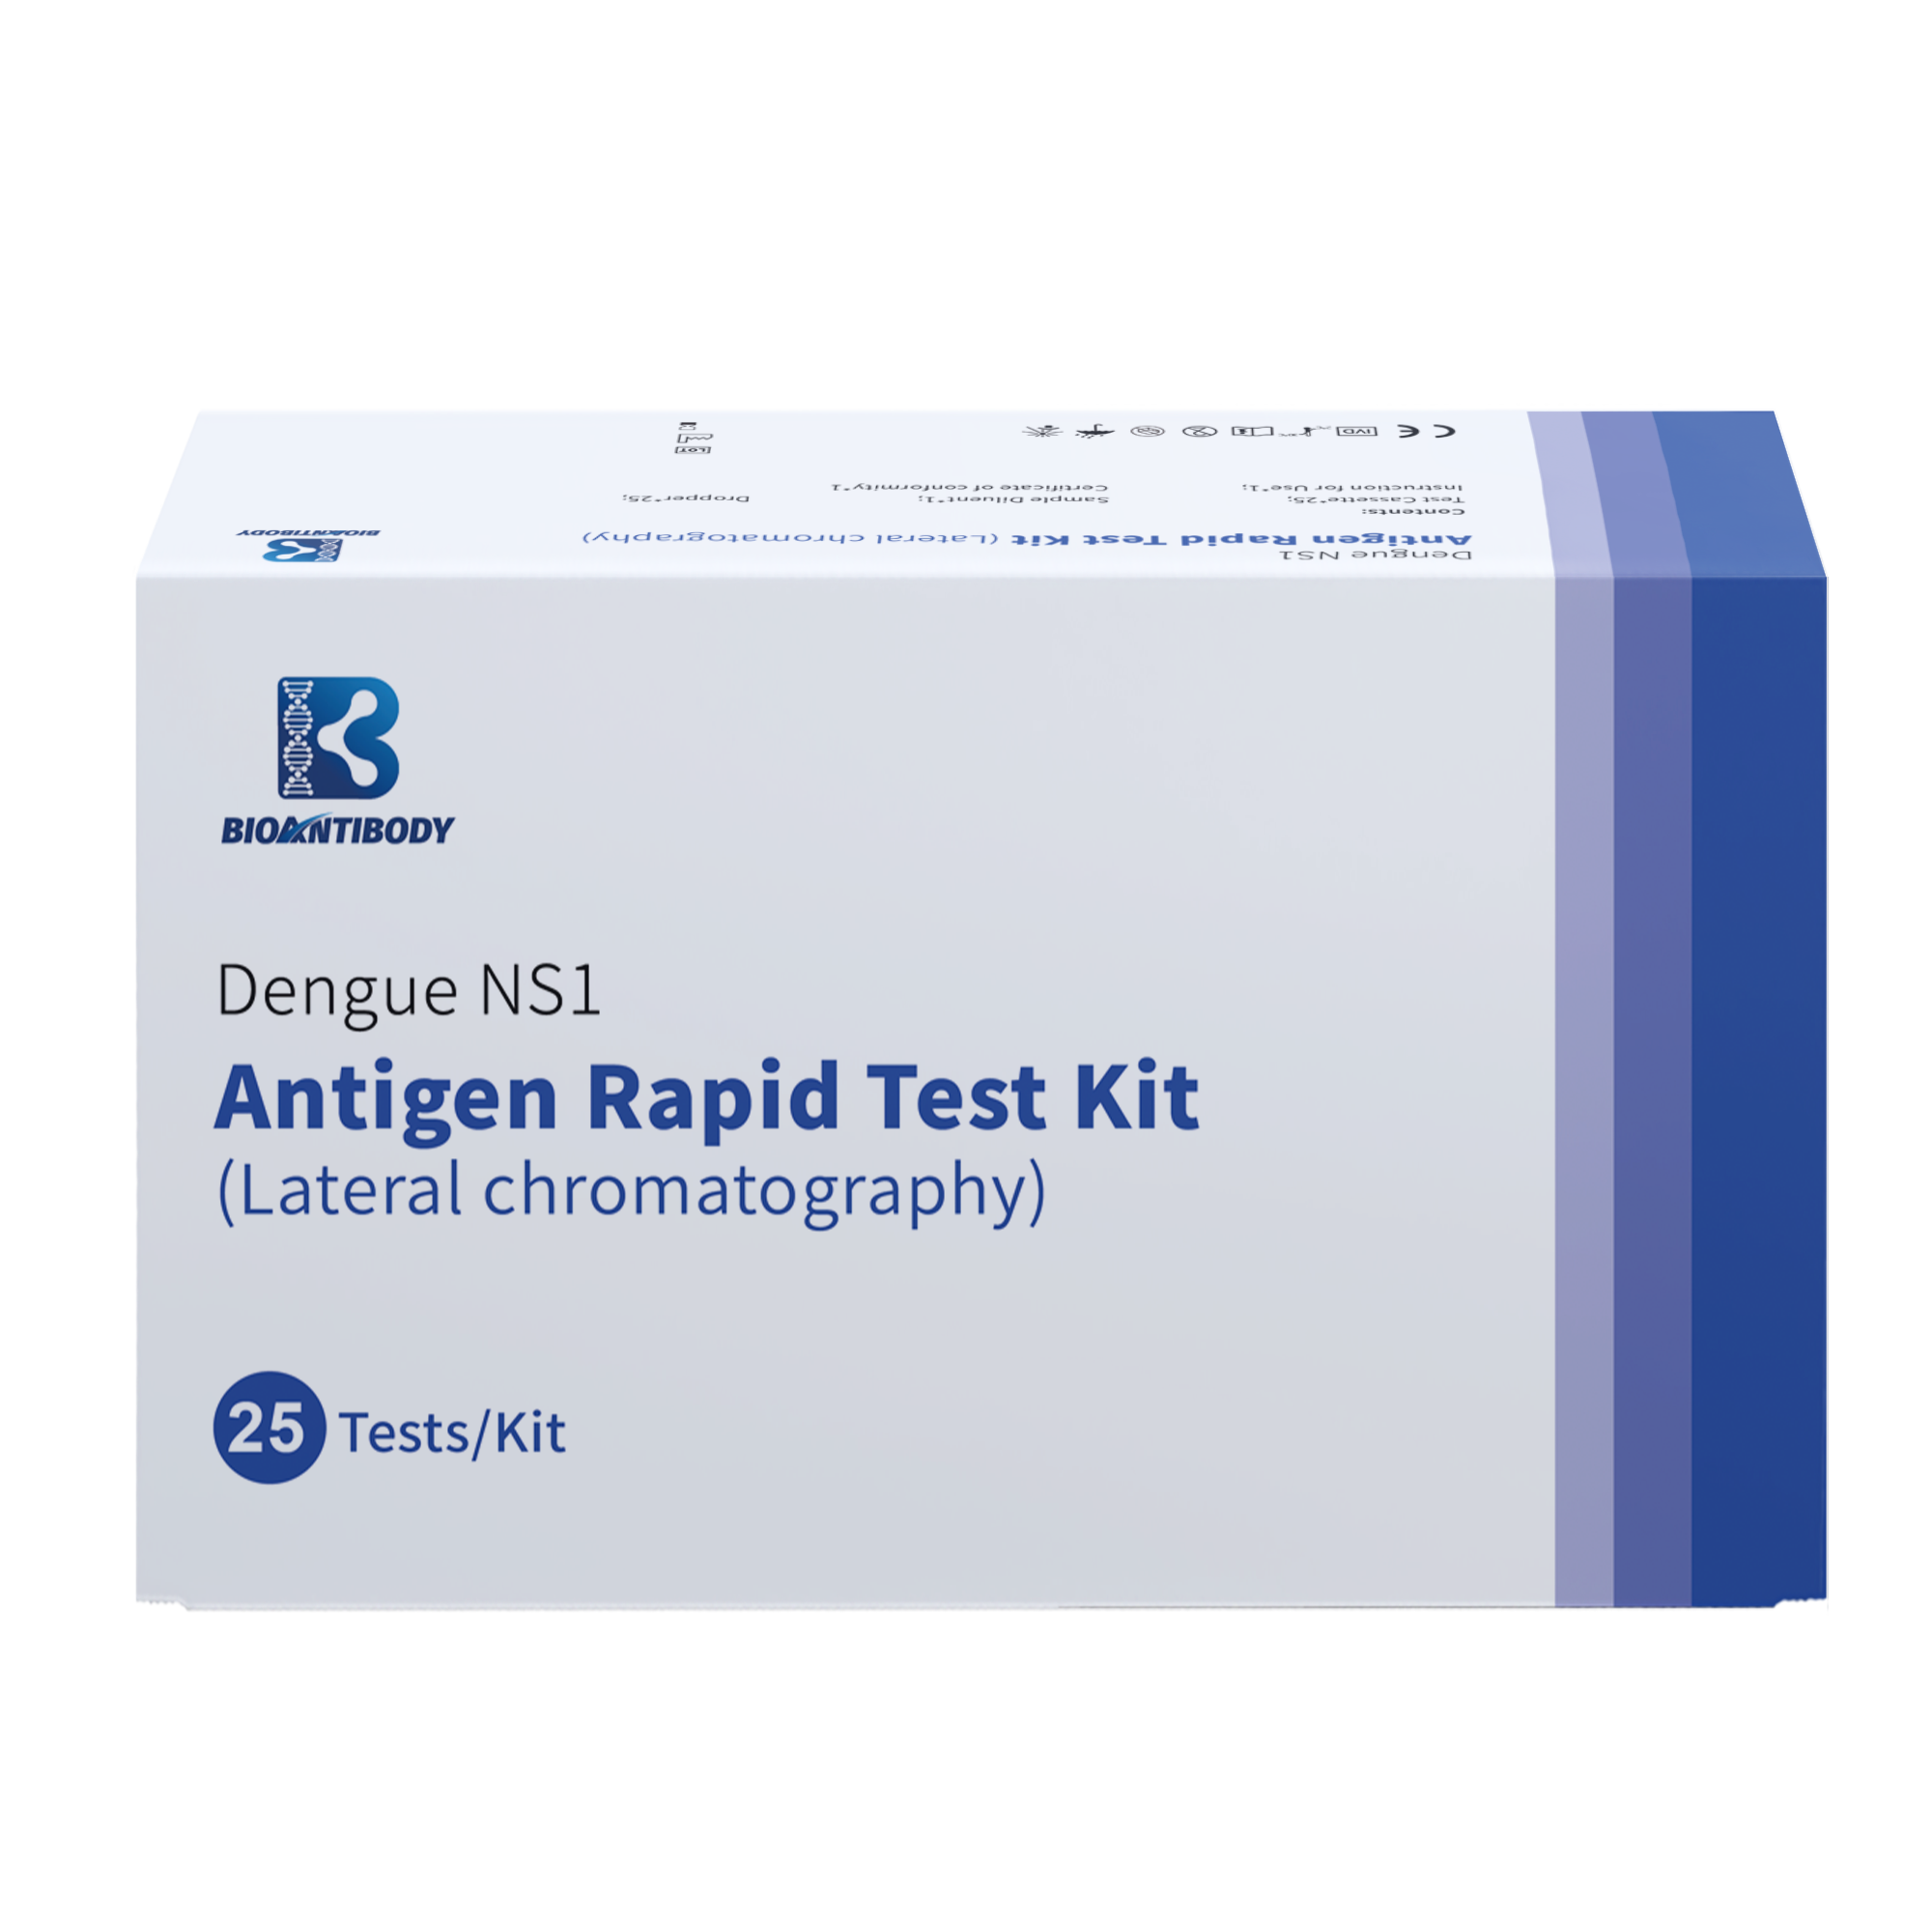 Dengue NS1 Antigen Rapid Test Kit (Lateral chromatography)